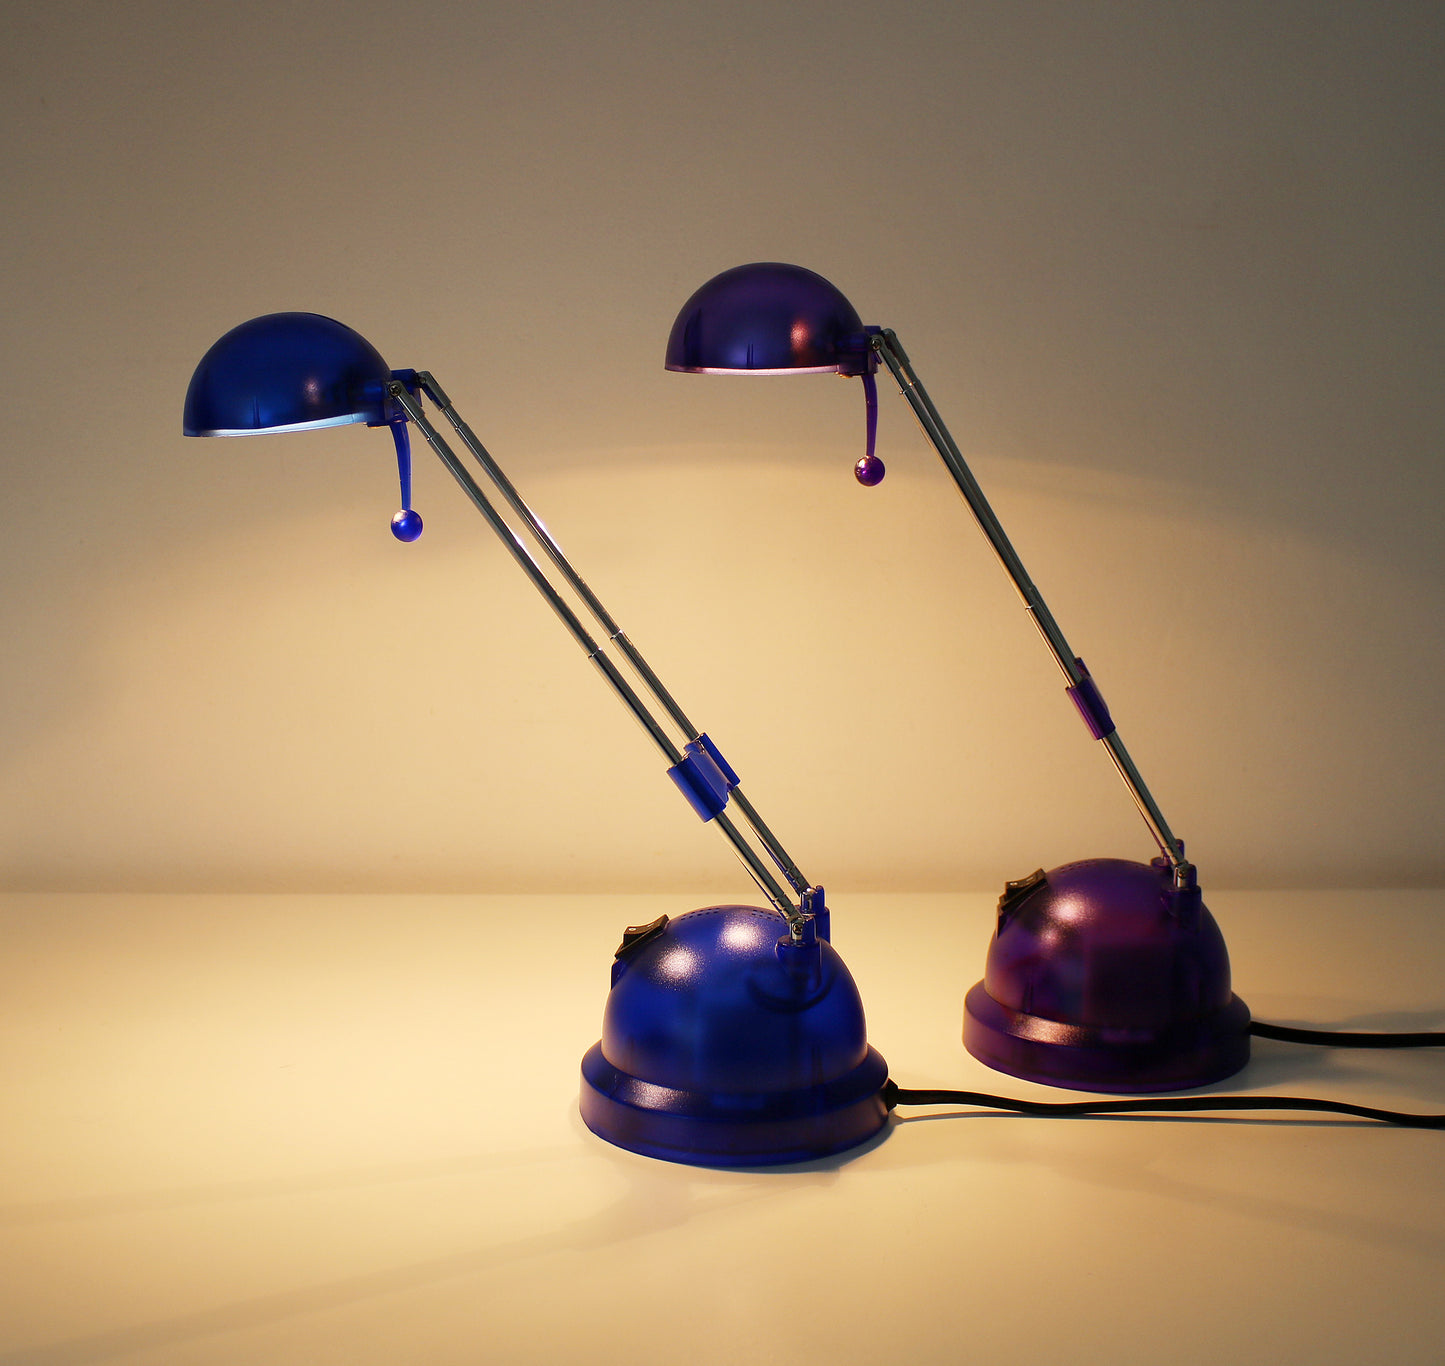 Frosted plastic desk light 1990s / Y2K - Purple or Blue